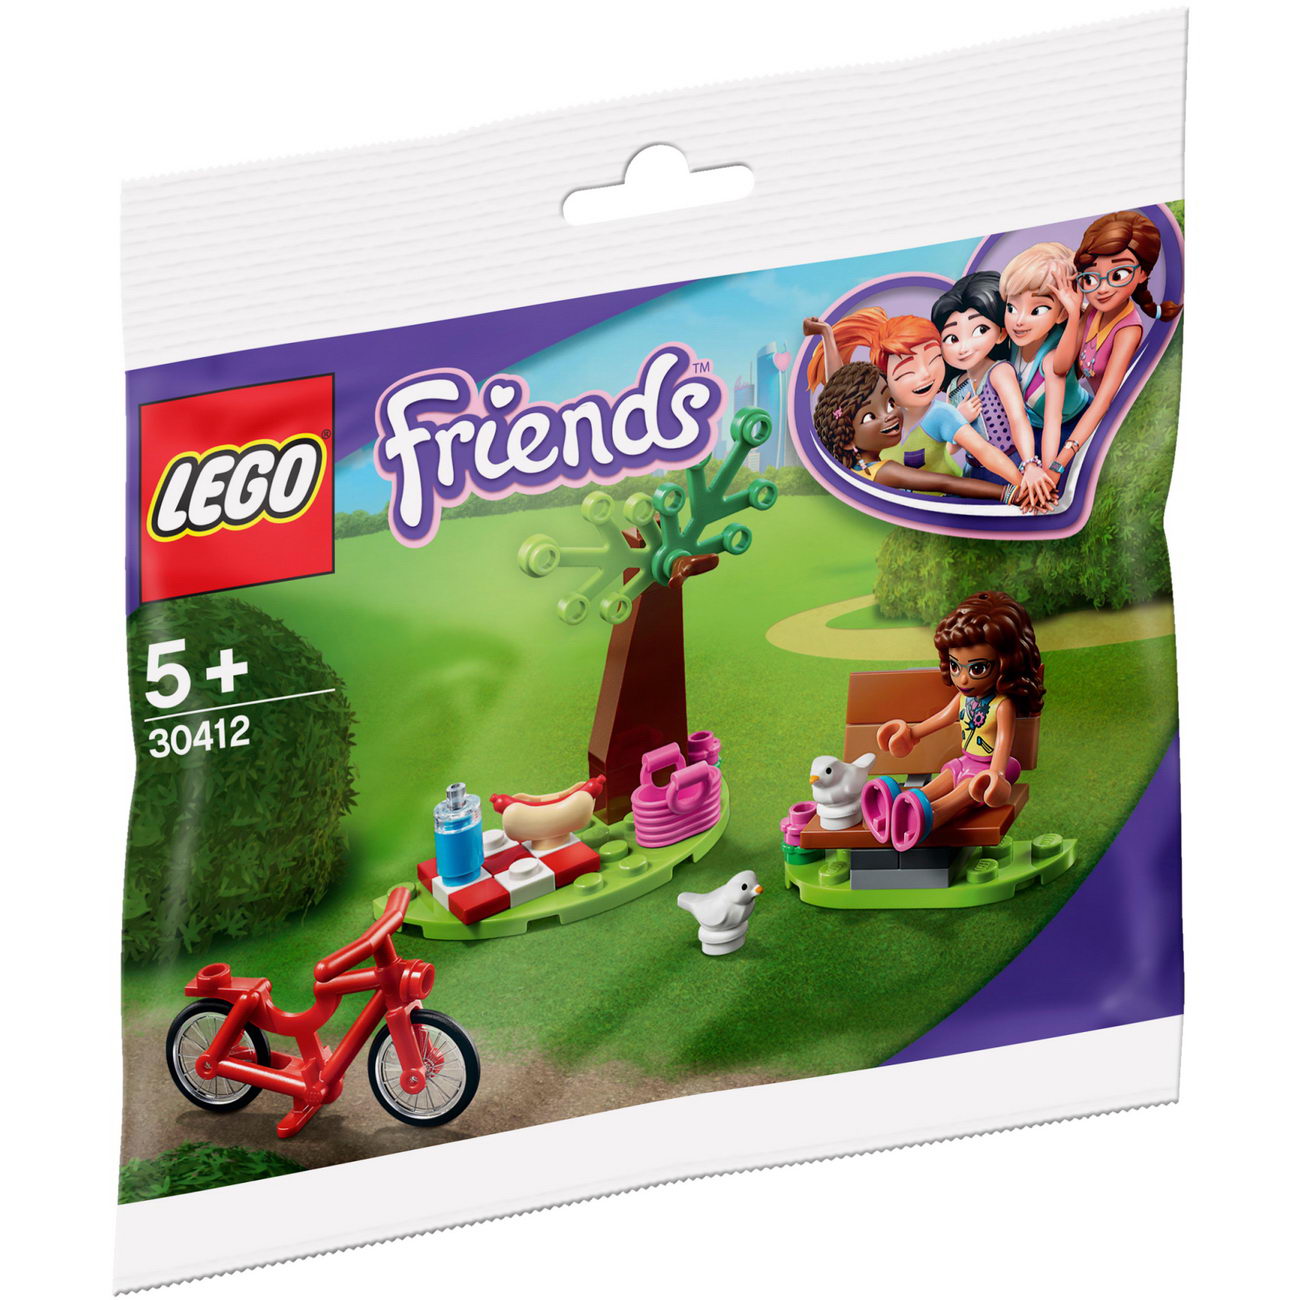 LEGO Friends 30412 - Picknick im Park